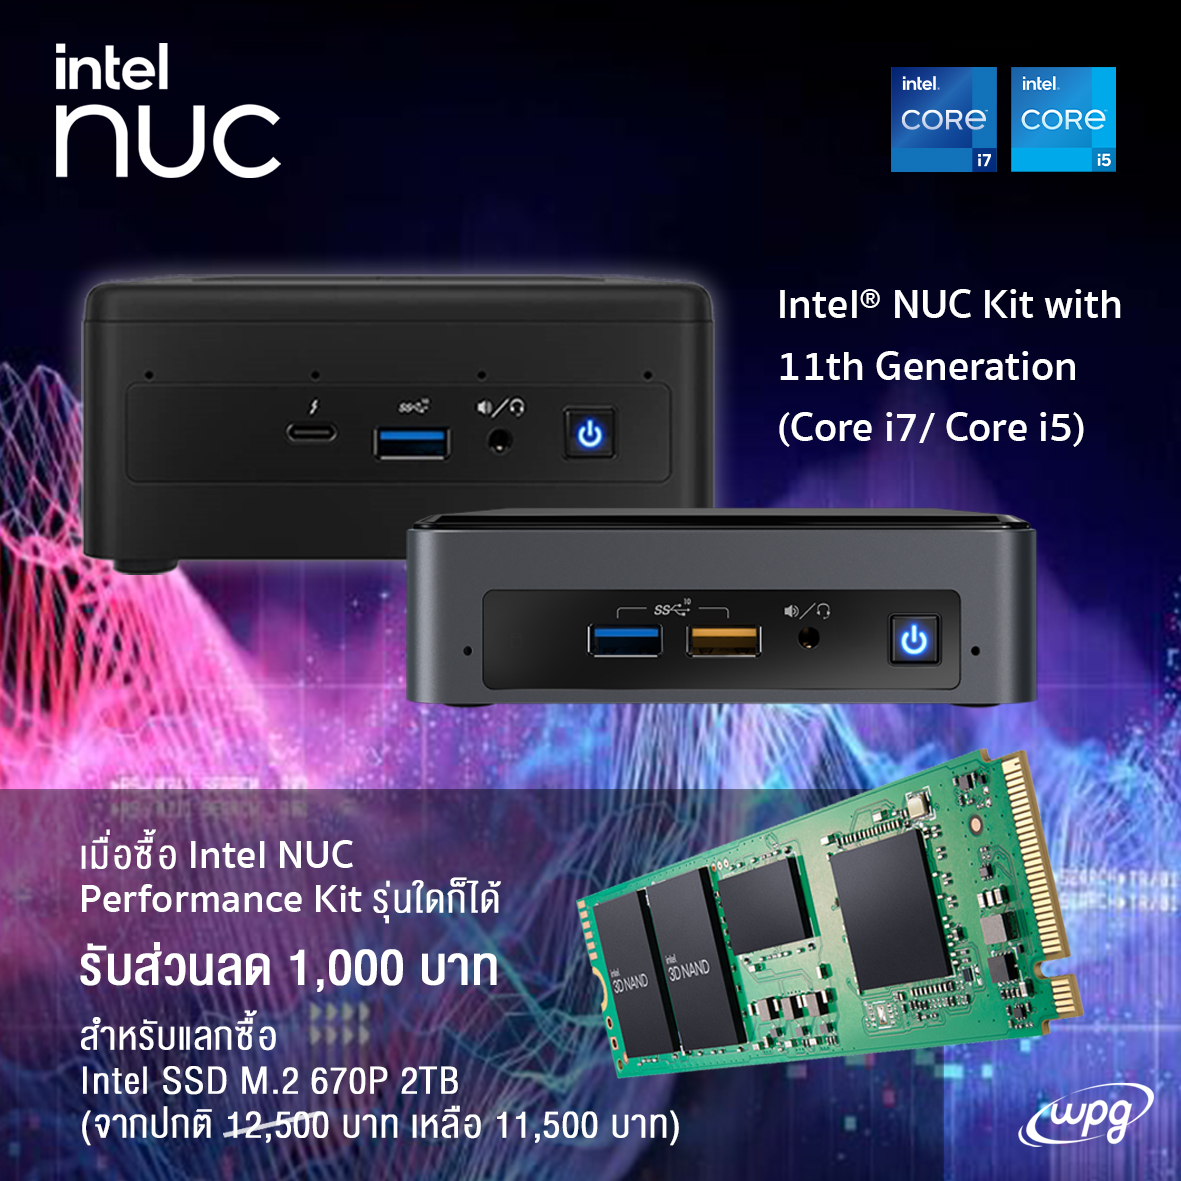 nuc kit intel 670p 2tb Intel จัดโปรโมชั่นสุดพิเศษกับโปรโมชั่นแพ๊คคู่มากมายเมื่อซื้อ Intel NUC Performance Kit (Core i7 /i5 ) และเมื่อซื้อเมนบอร์ด Biostar รุ่น Z590 Valkyrie, Z590I Valkyrie และ Z590GTA รับส่วนลดทันที 1,000 บาท